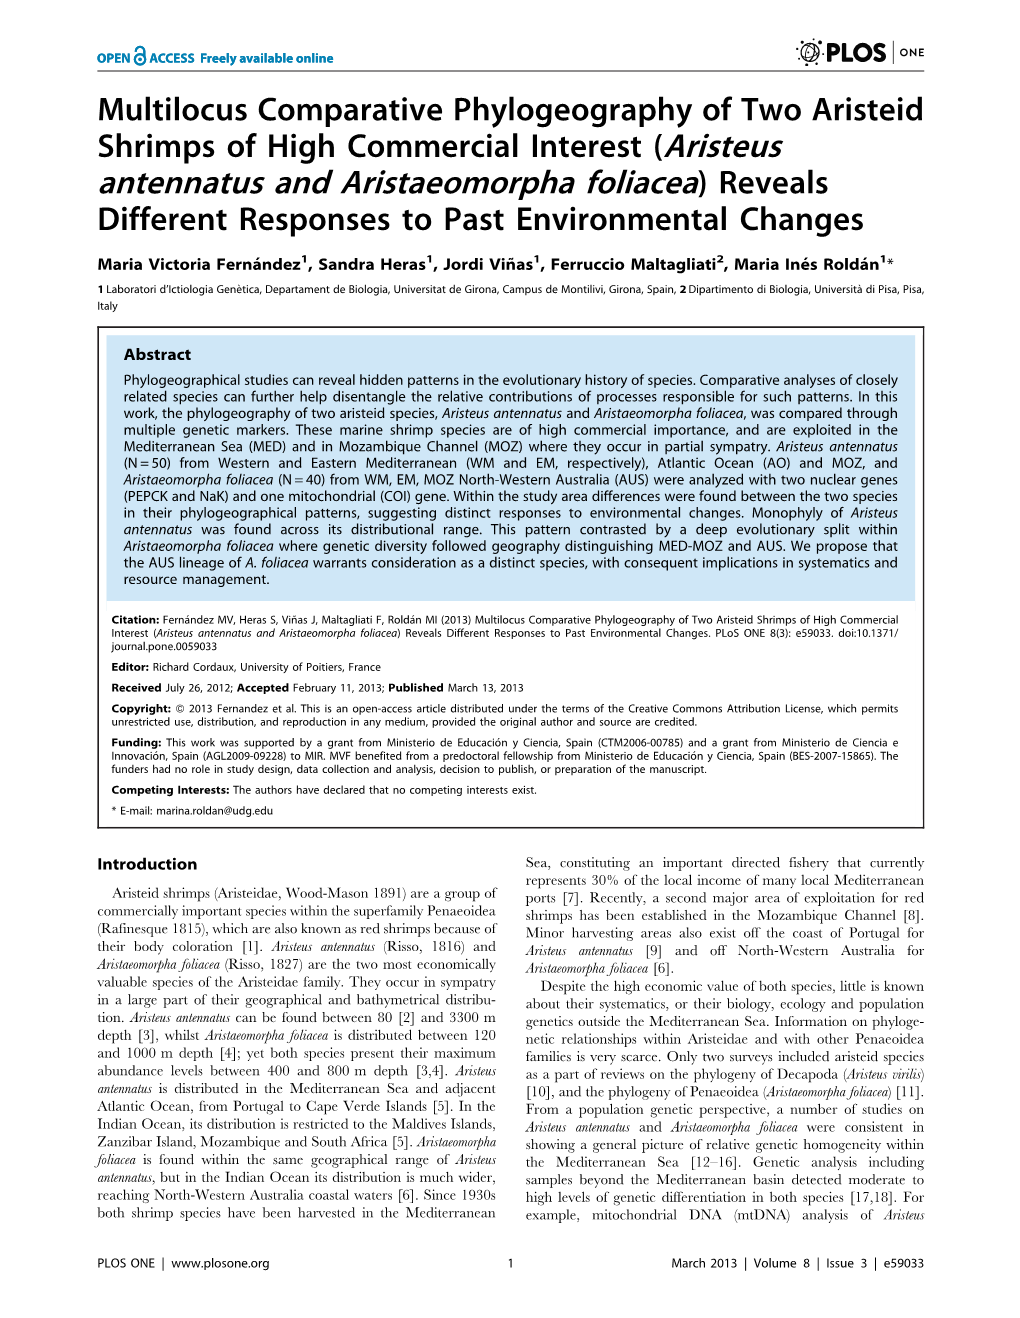 (Aristeus Antennatus and Aristaeomorpha Foliacea) Reveals Different Responses to Past Environmental Changes